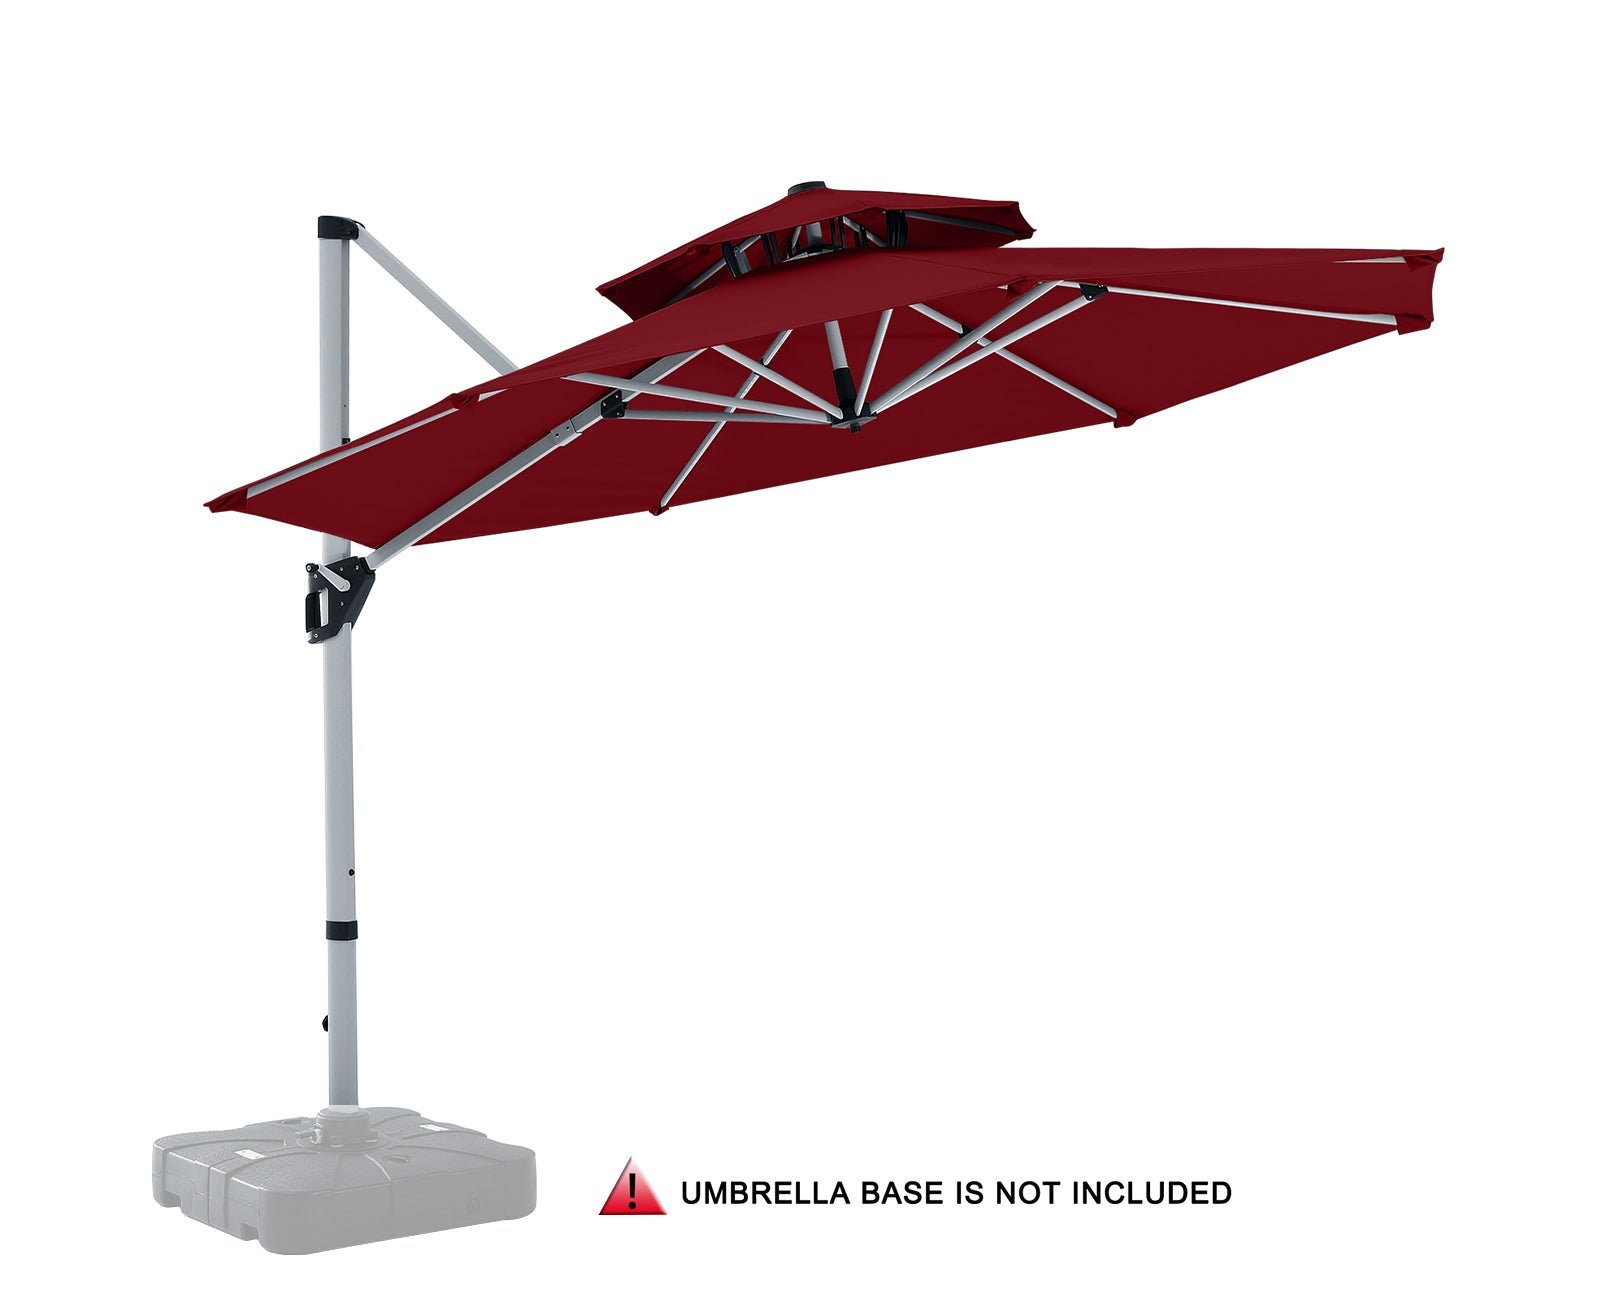 Cantilever Patio Umbrella Double Top Round Umbrella